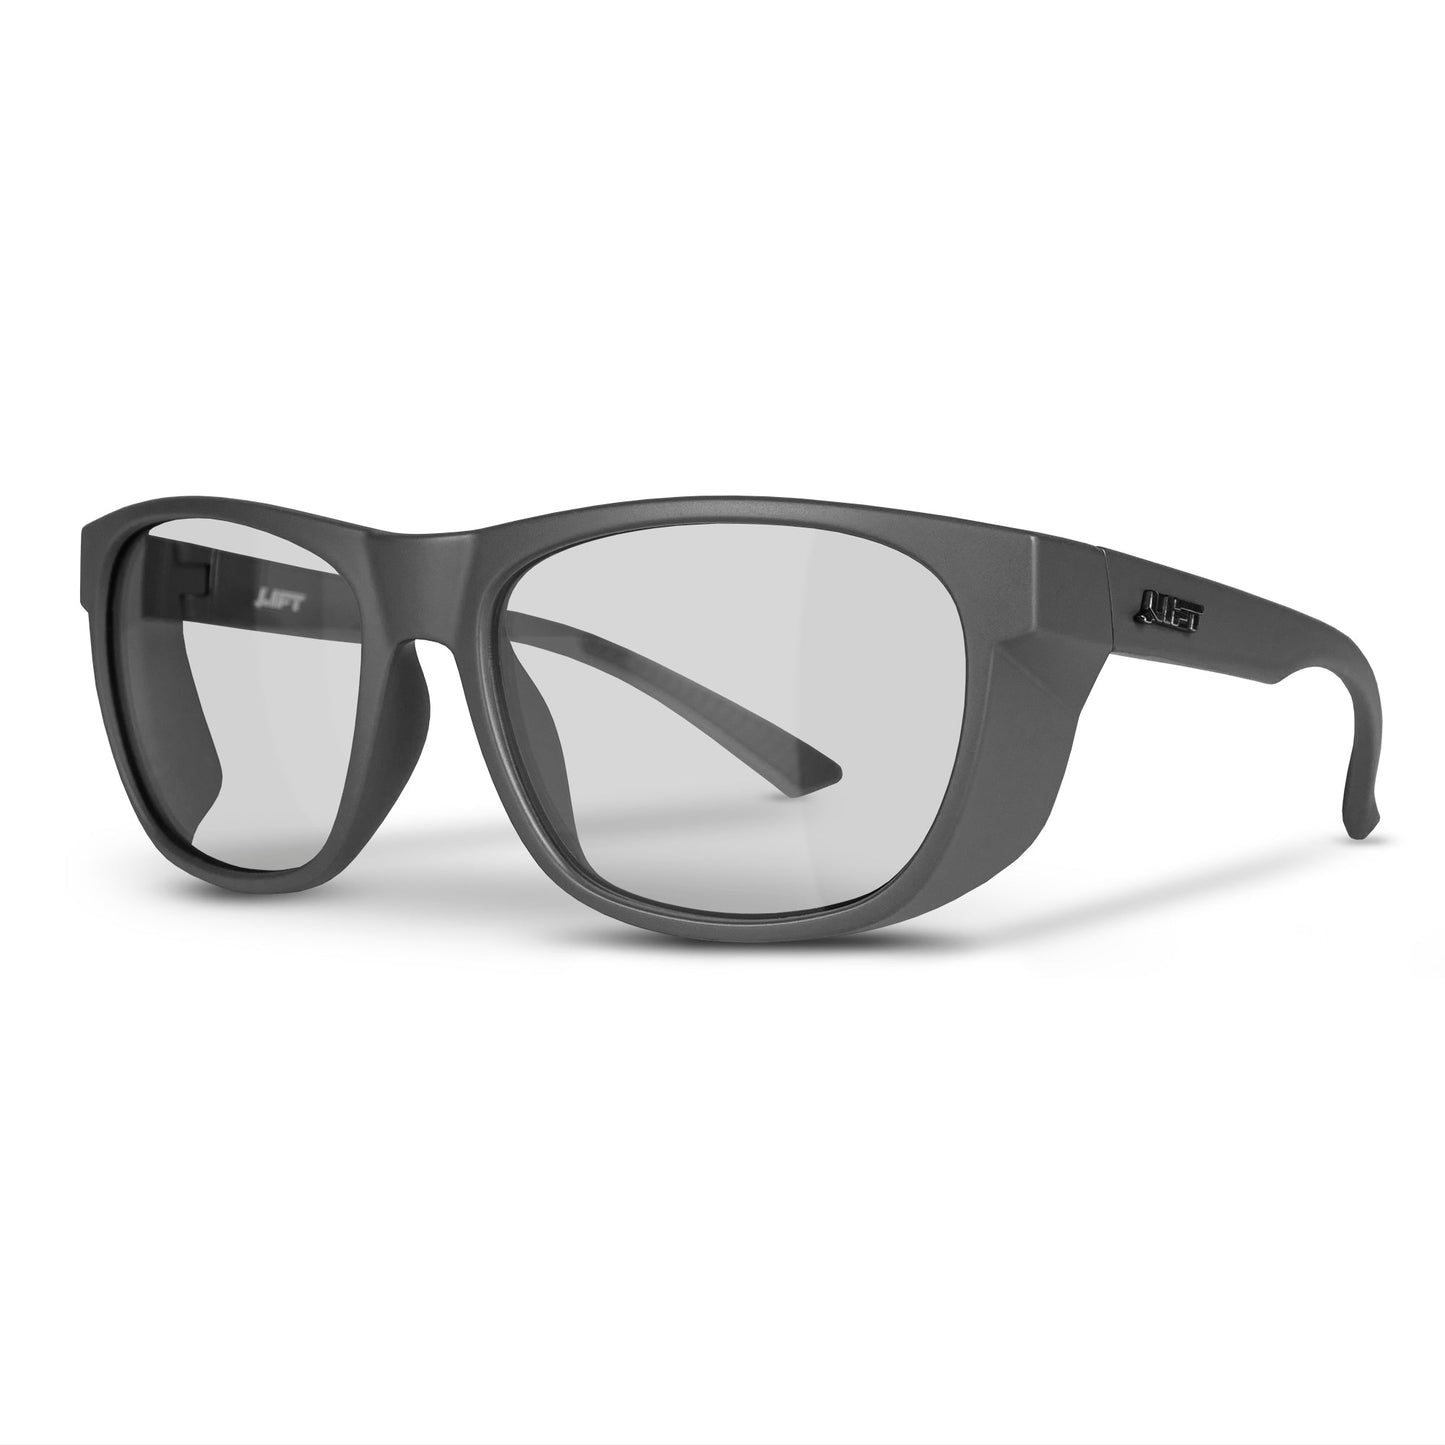 Tracker Safety Glasses - LIFT Safety